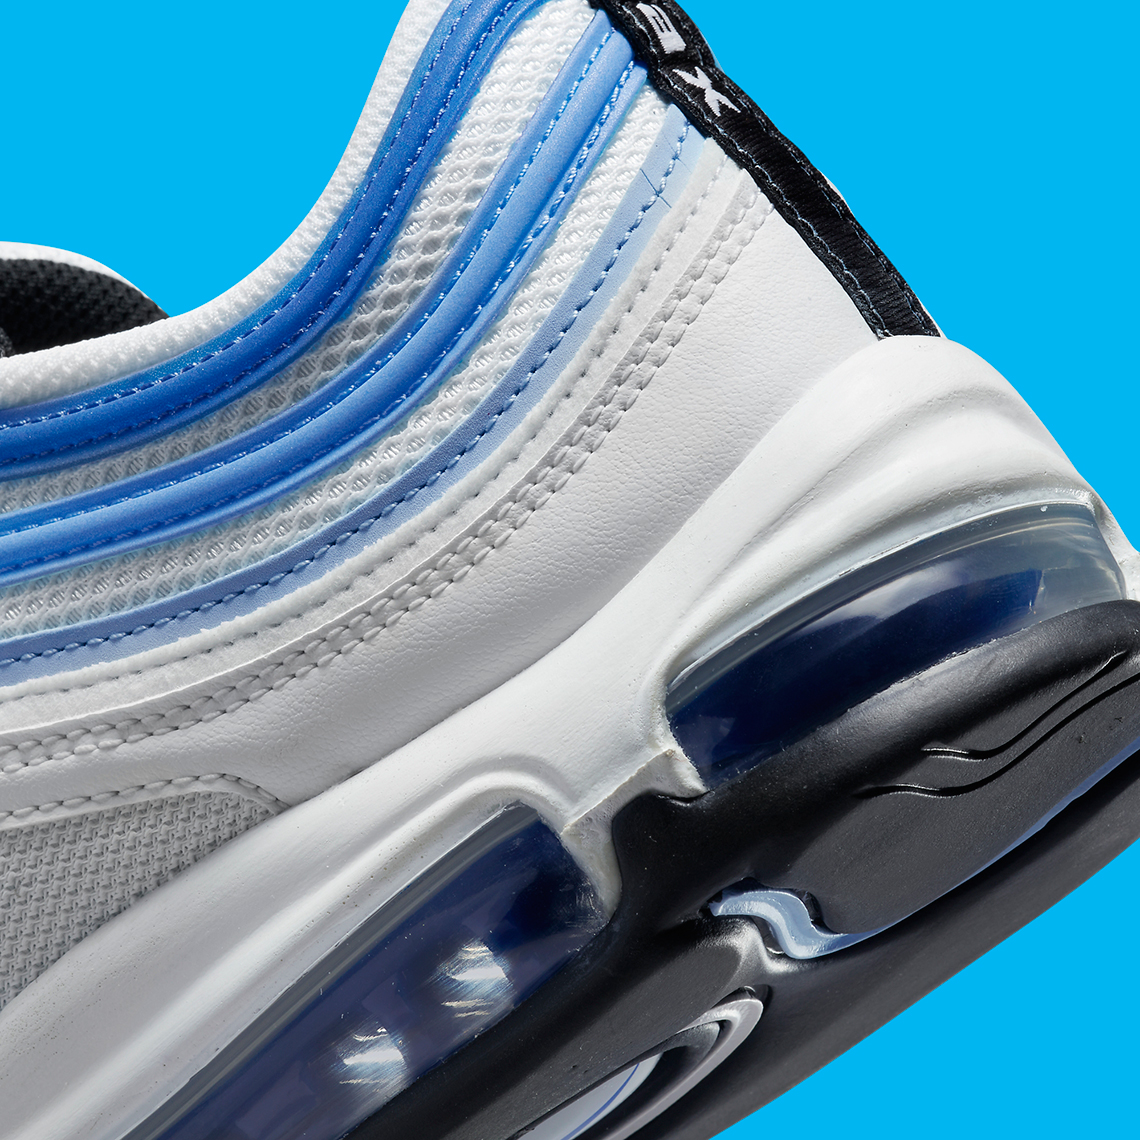 Nike strappy Sportswear Abito bianco nero Blueberry Do8900 100 Release Date 6